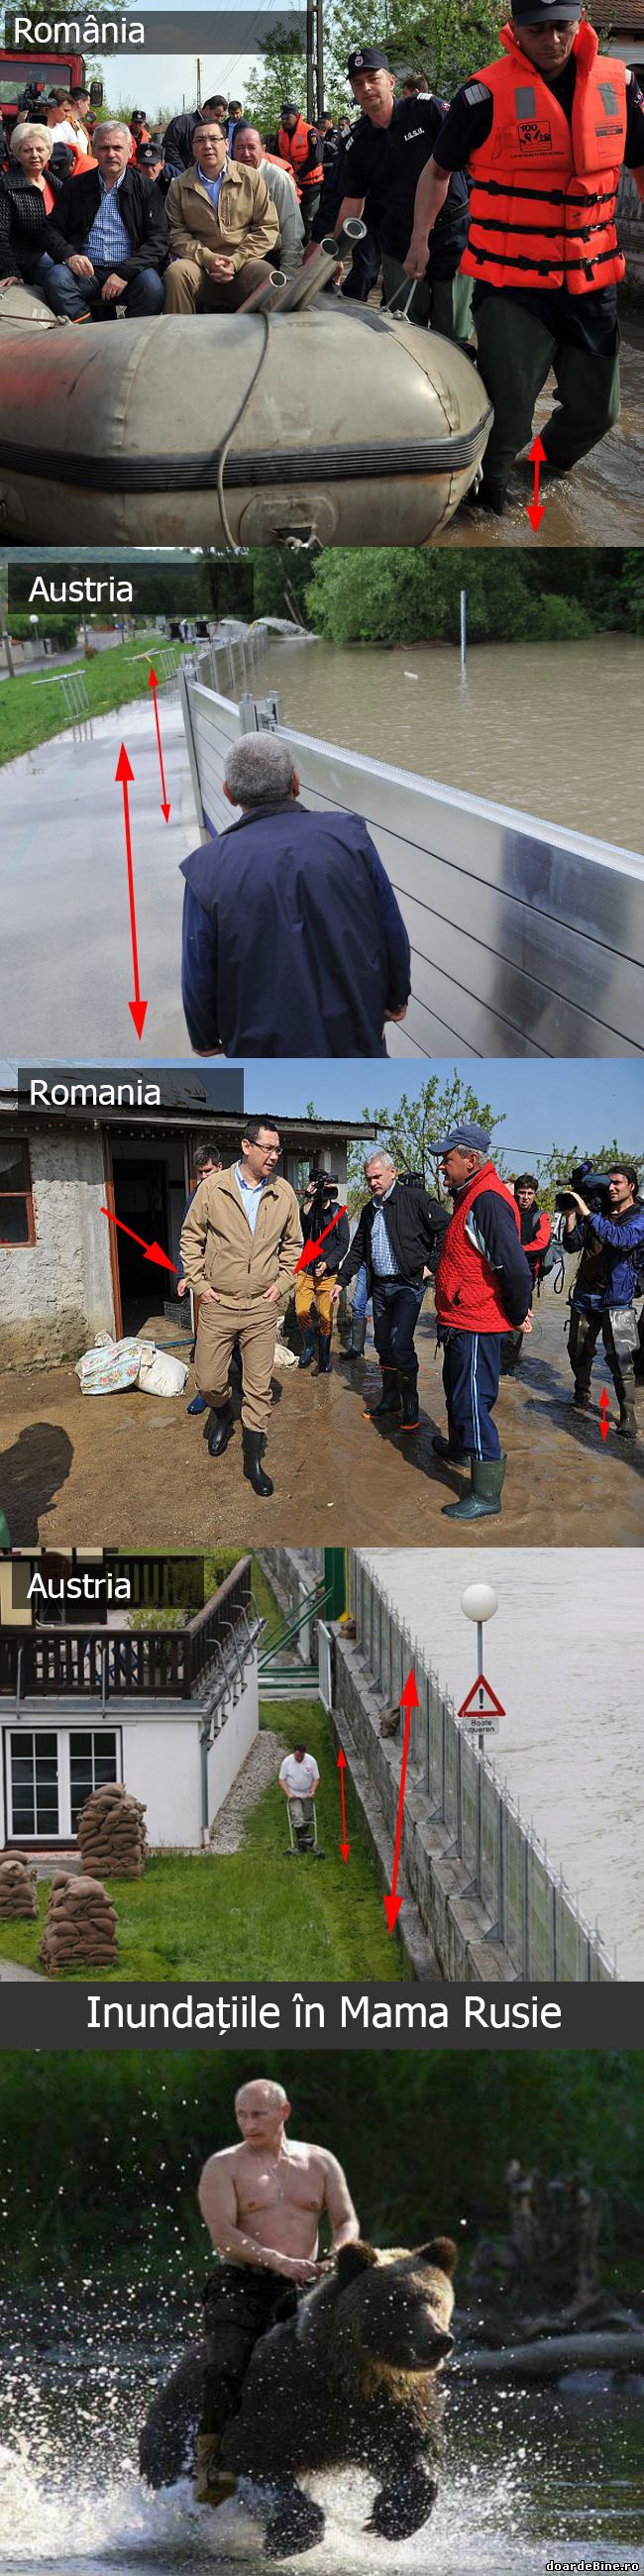 Inundațiile, la nemți și la români | poze haioase